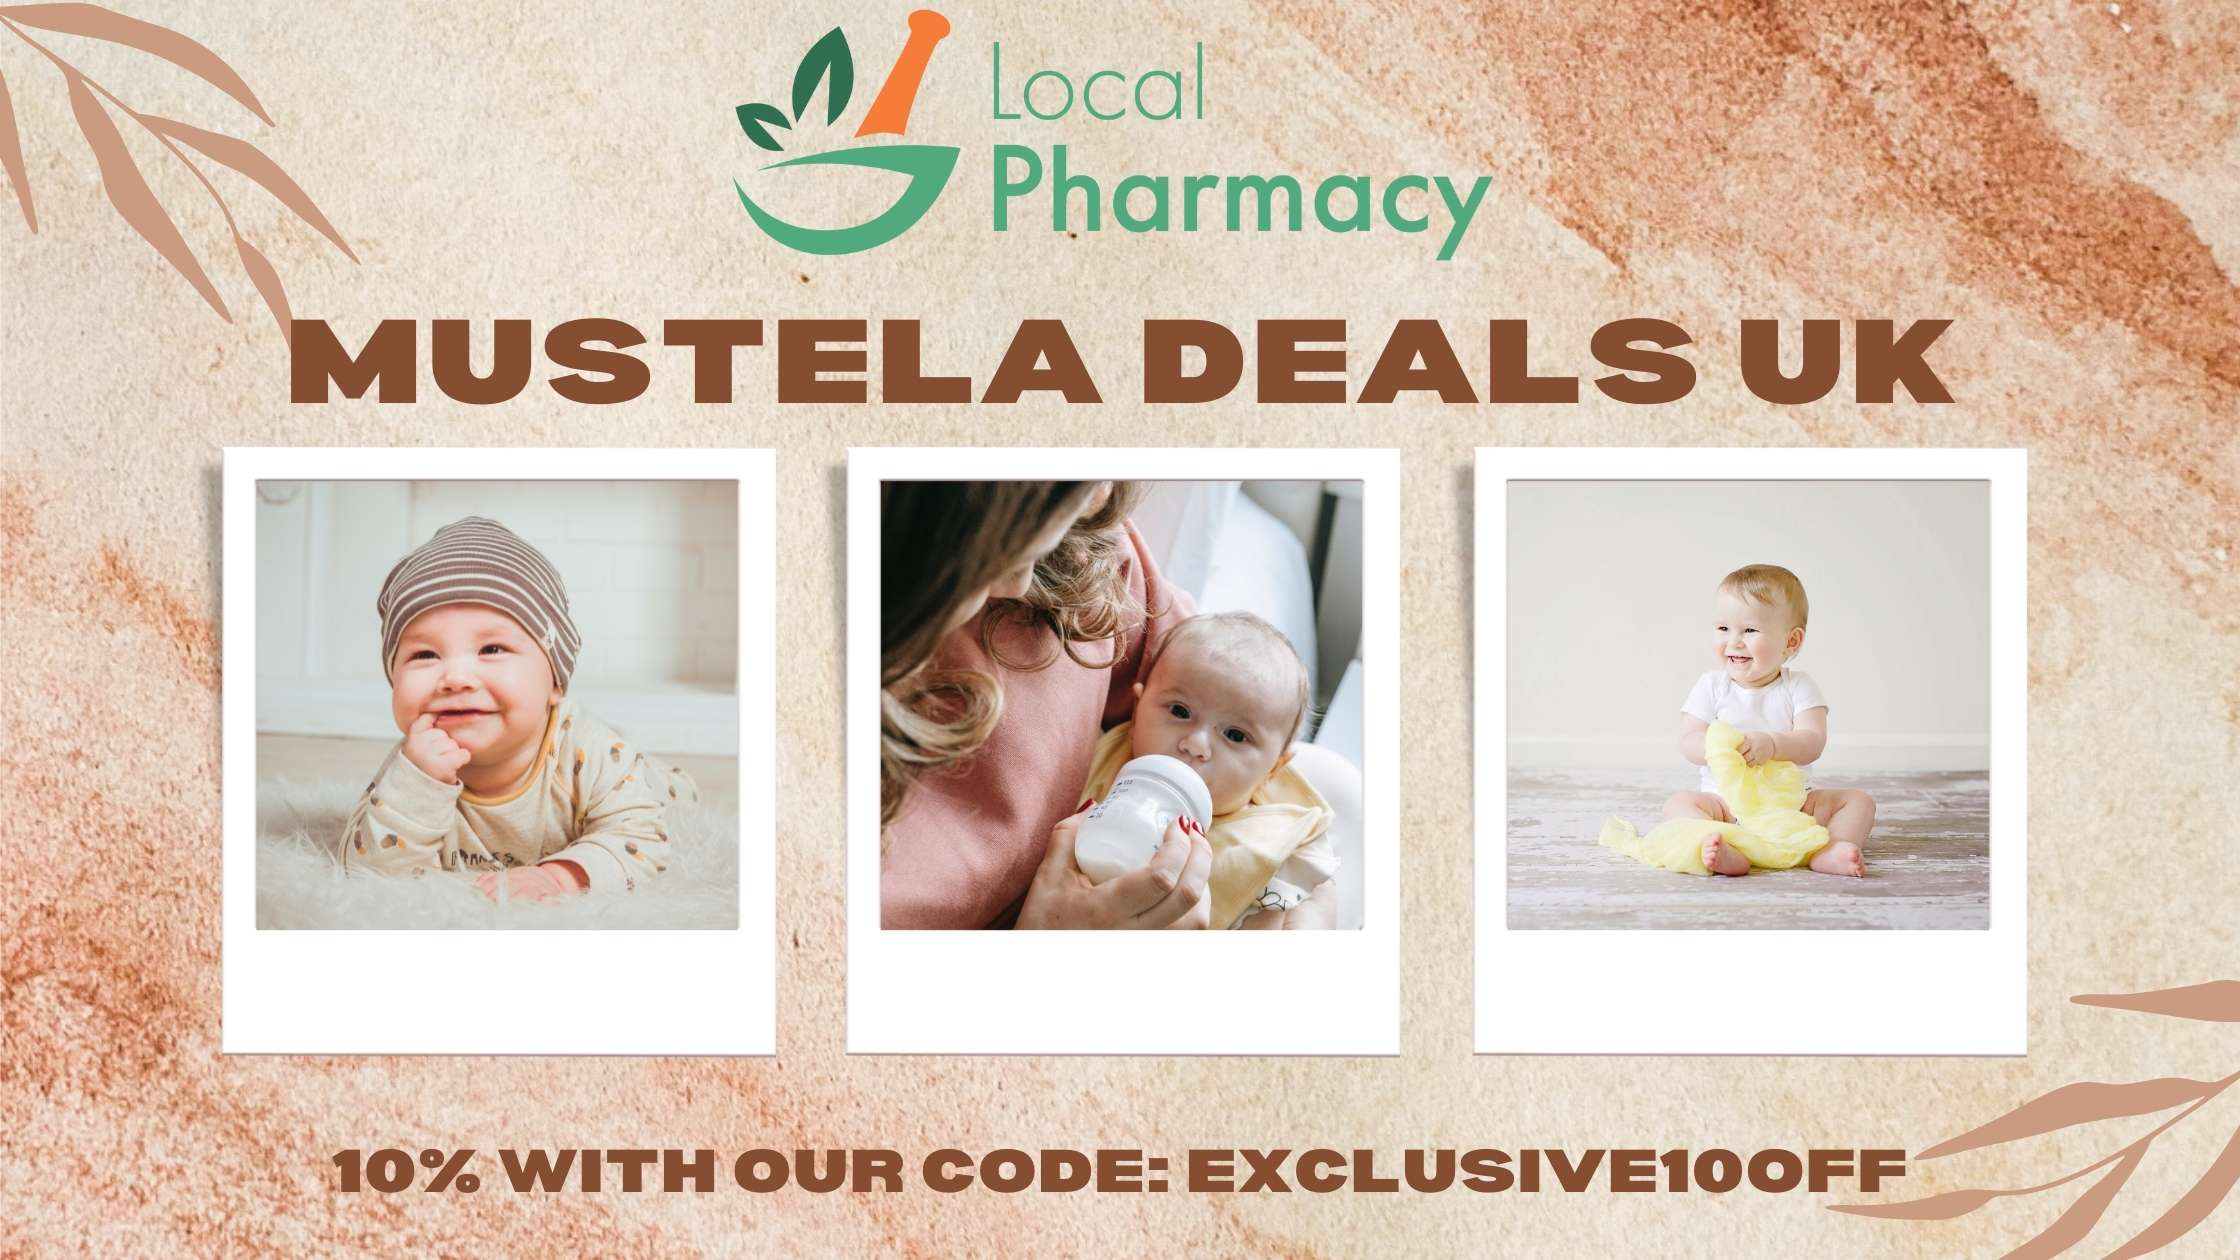 Mustela coupon code and deals uk